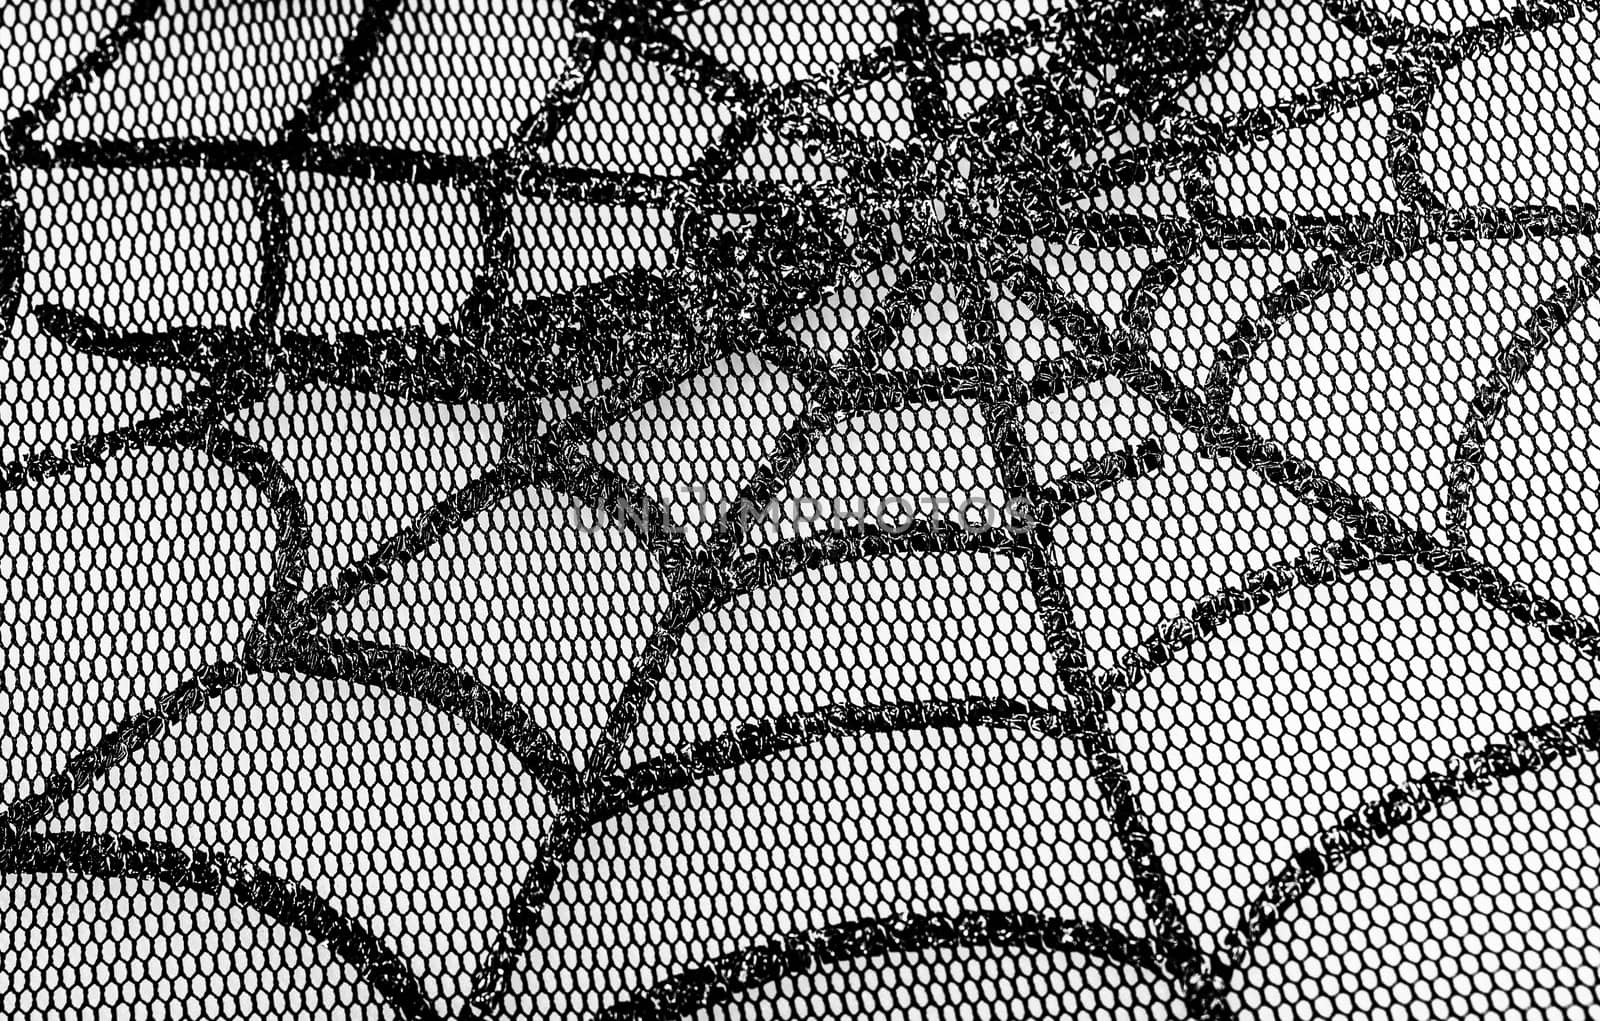 Spiderweb by Vagengeym